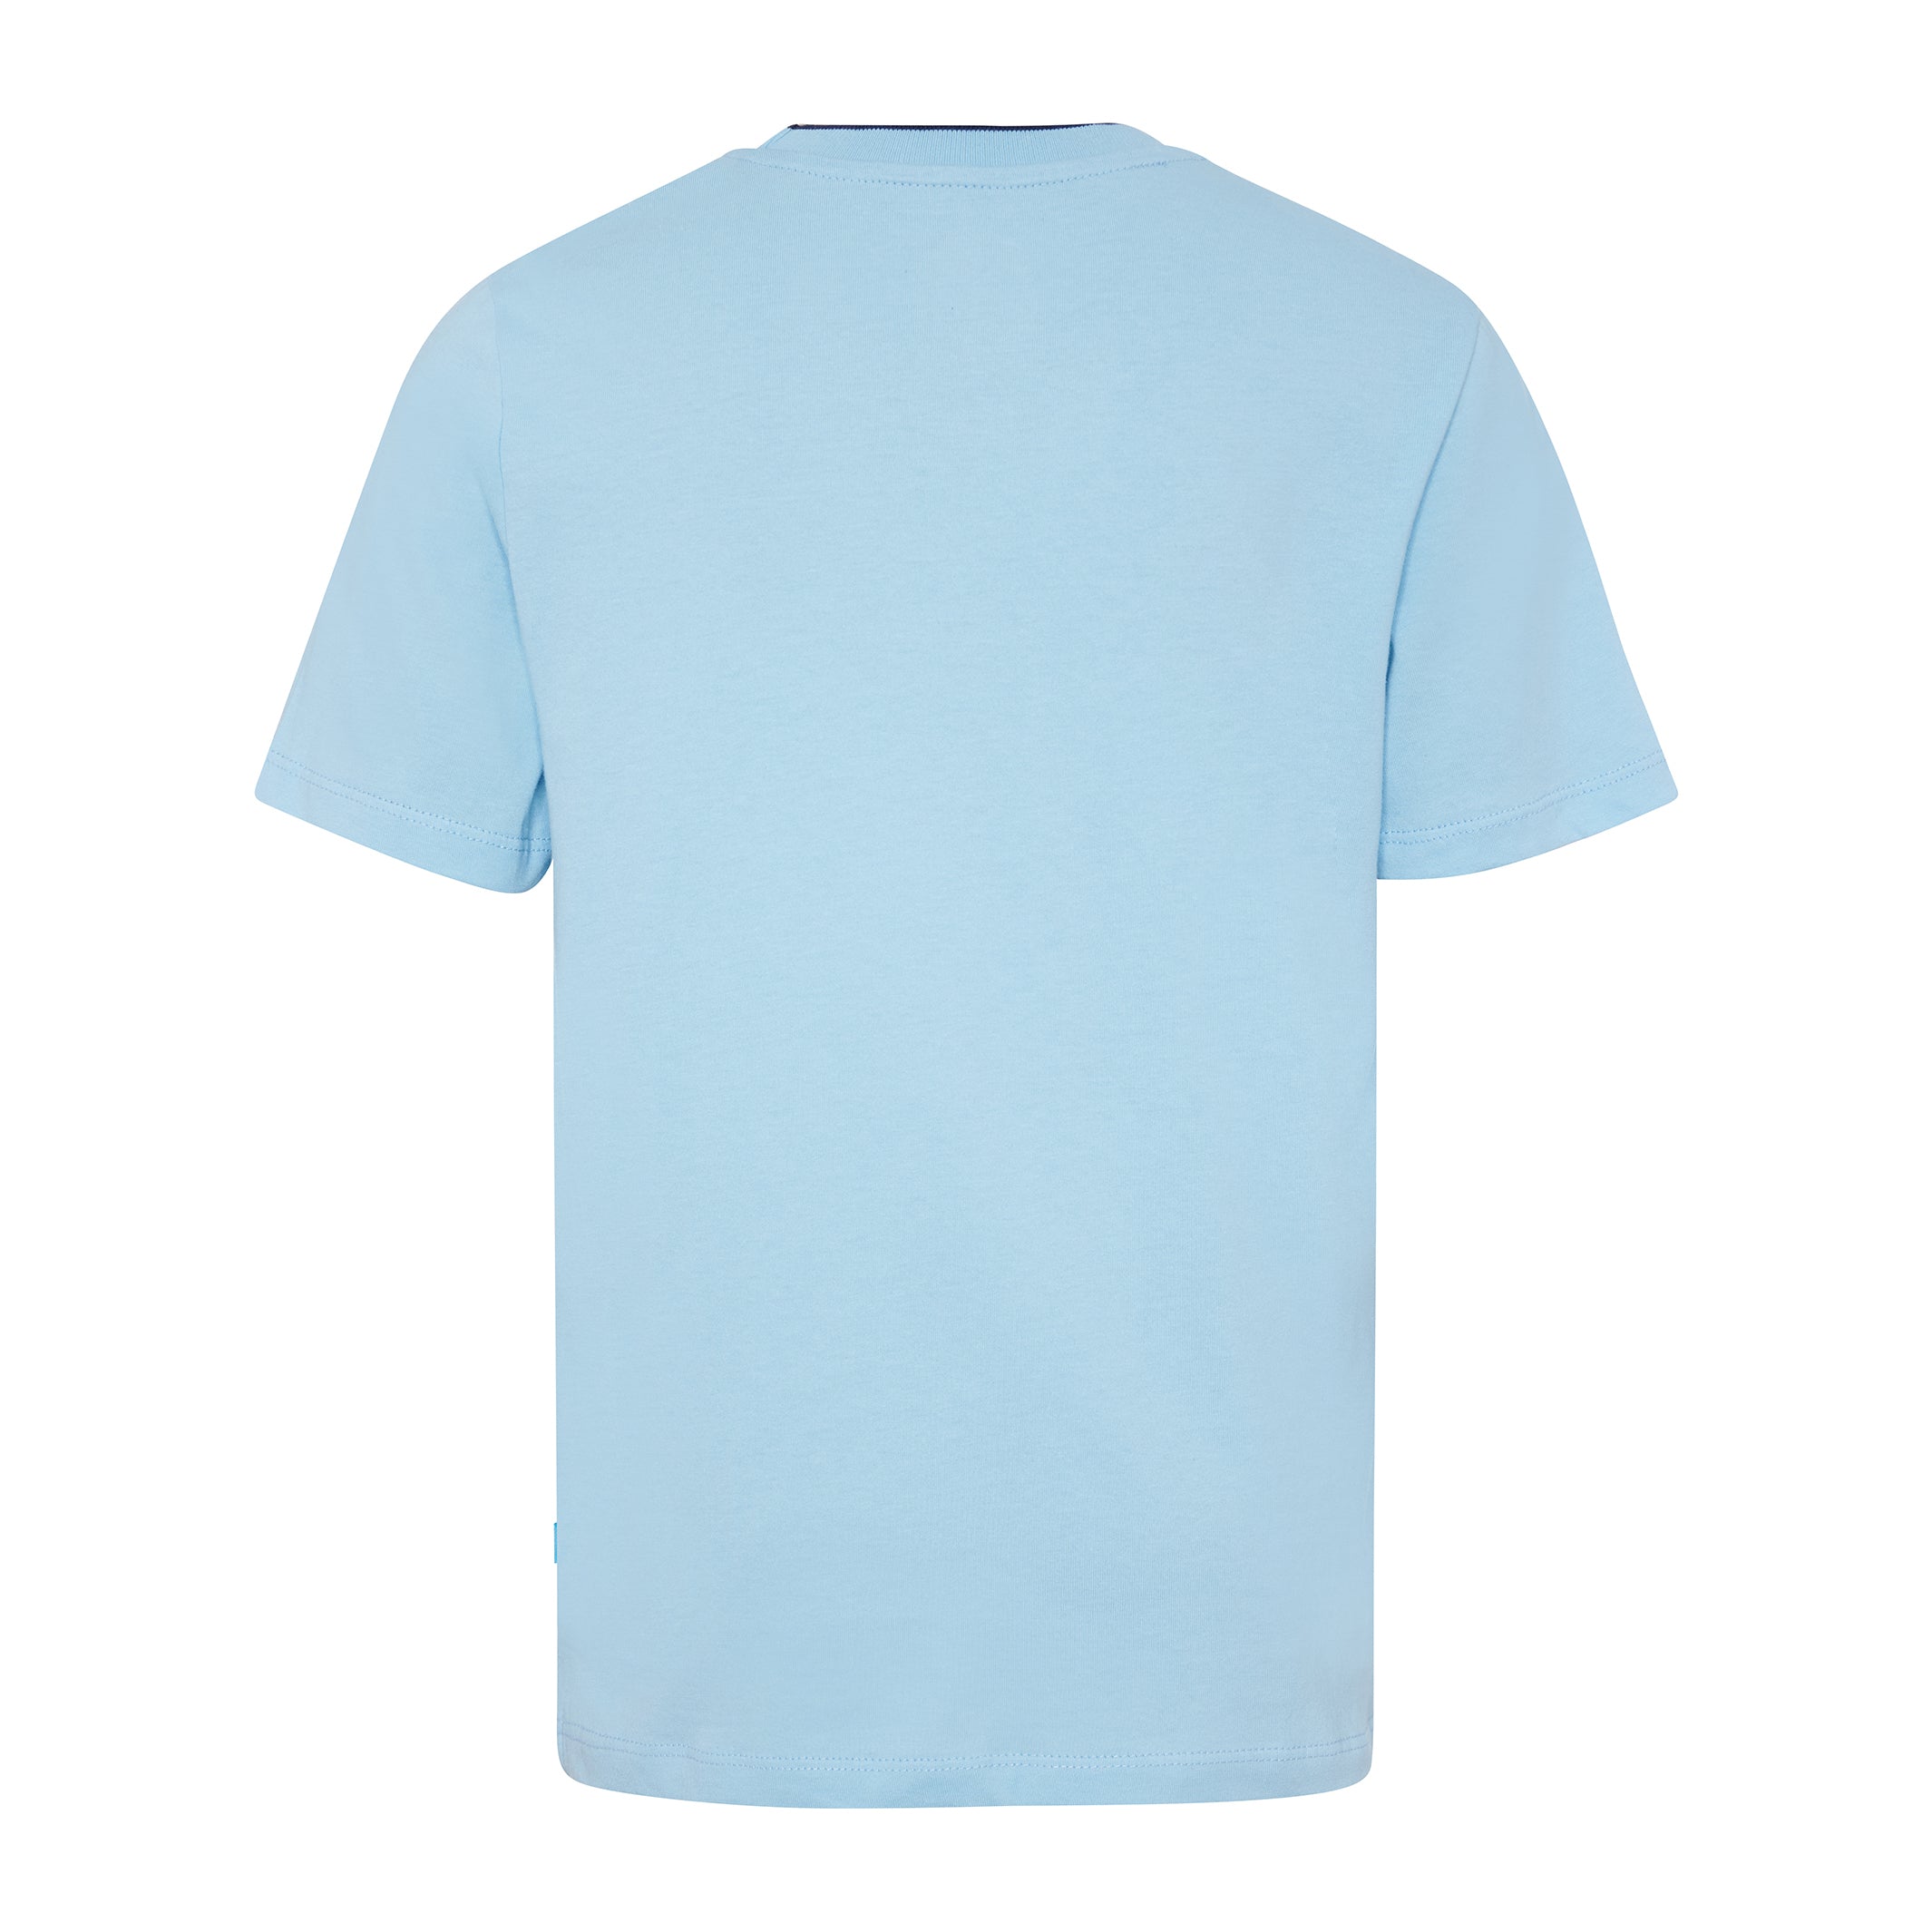 Kid's Unisex Blue T-Shirt AO Textured Logo Back View